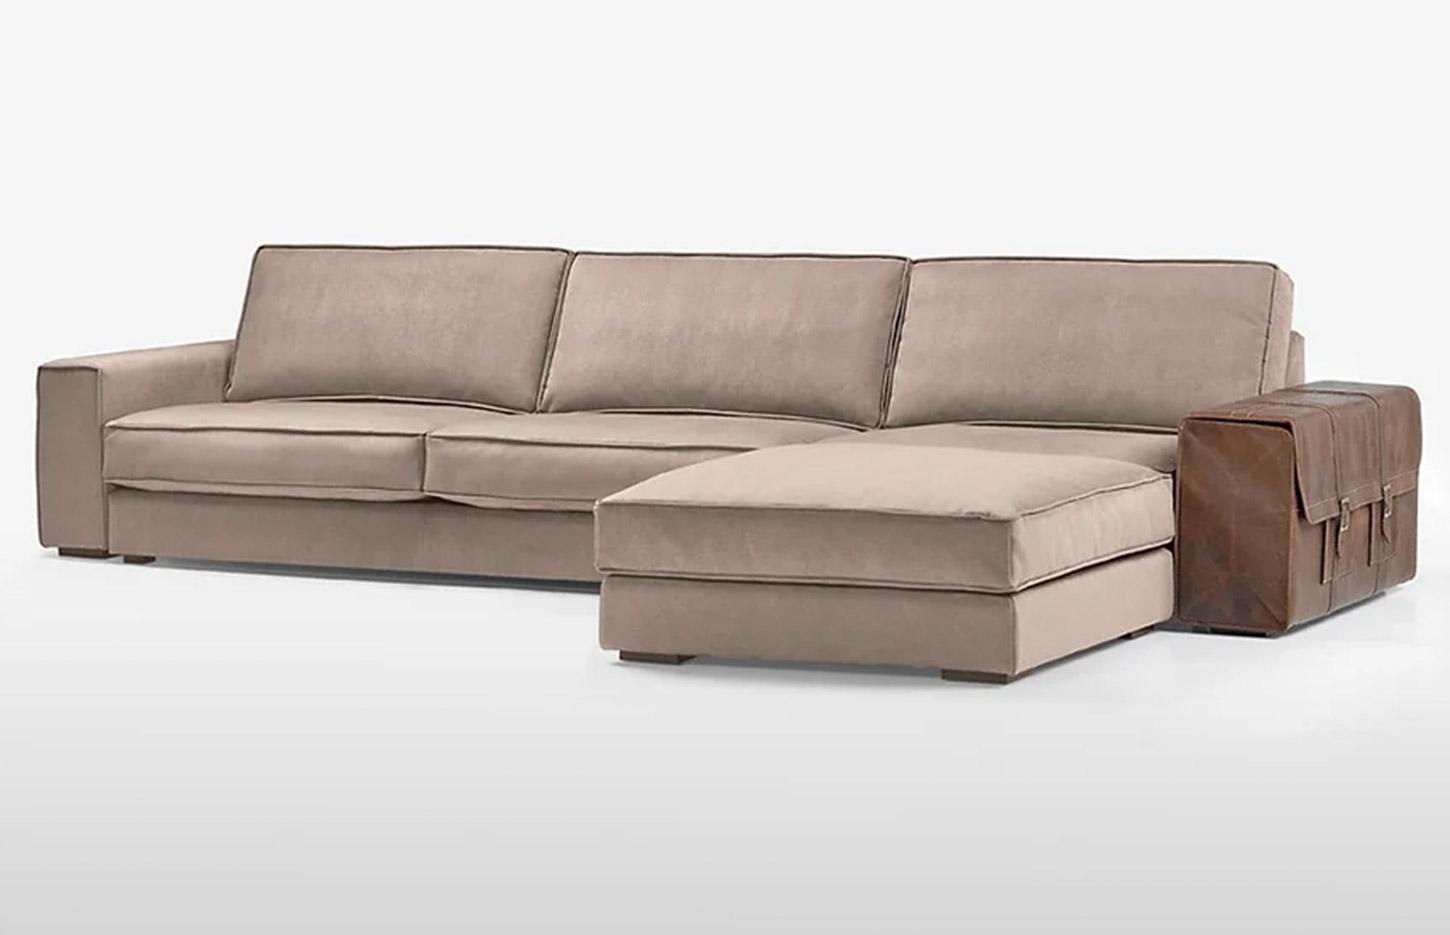 Canapé confortable en tissu avec malle en cuir, gamme Izoard - France Bureau